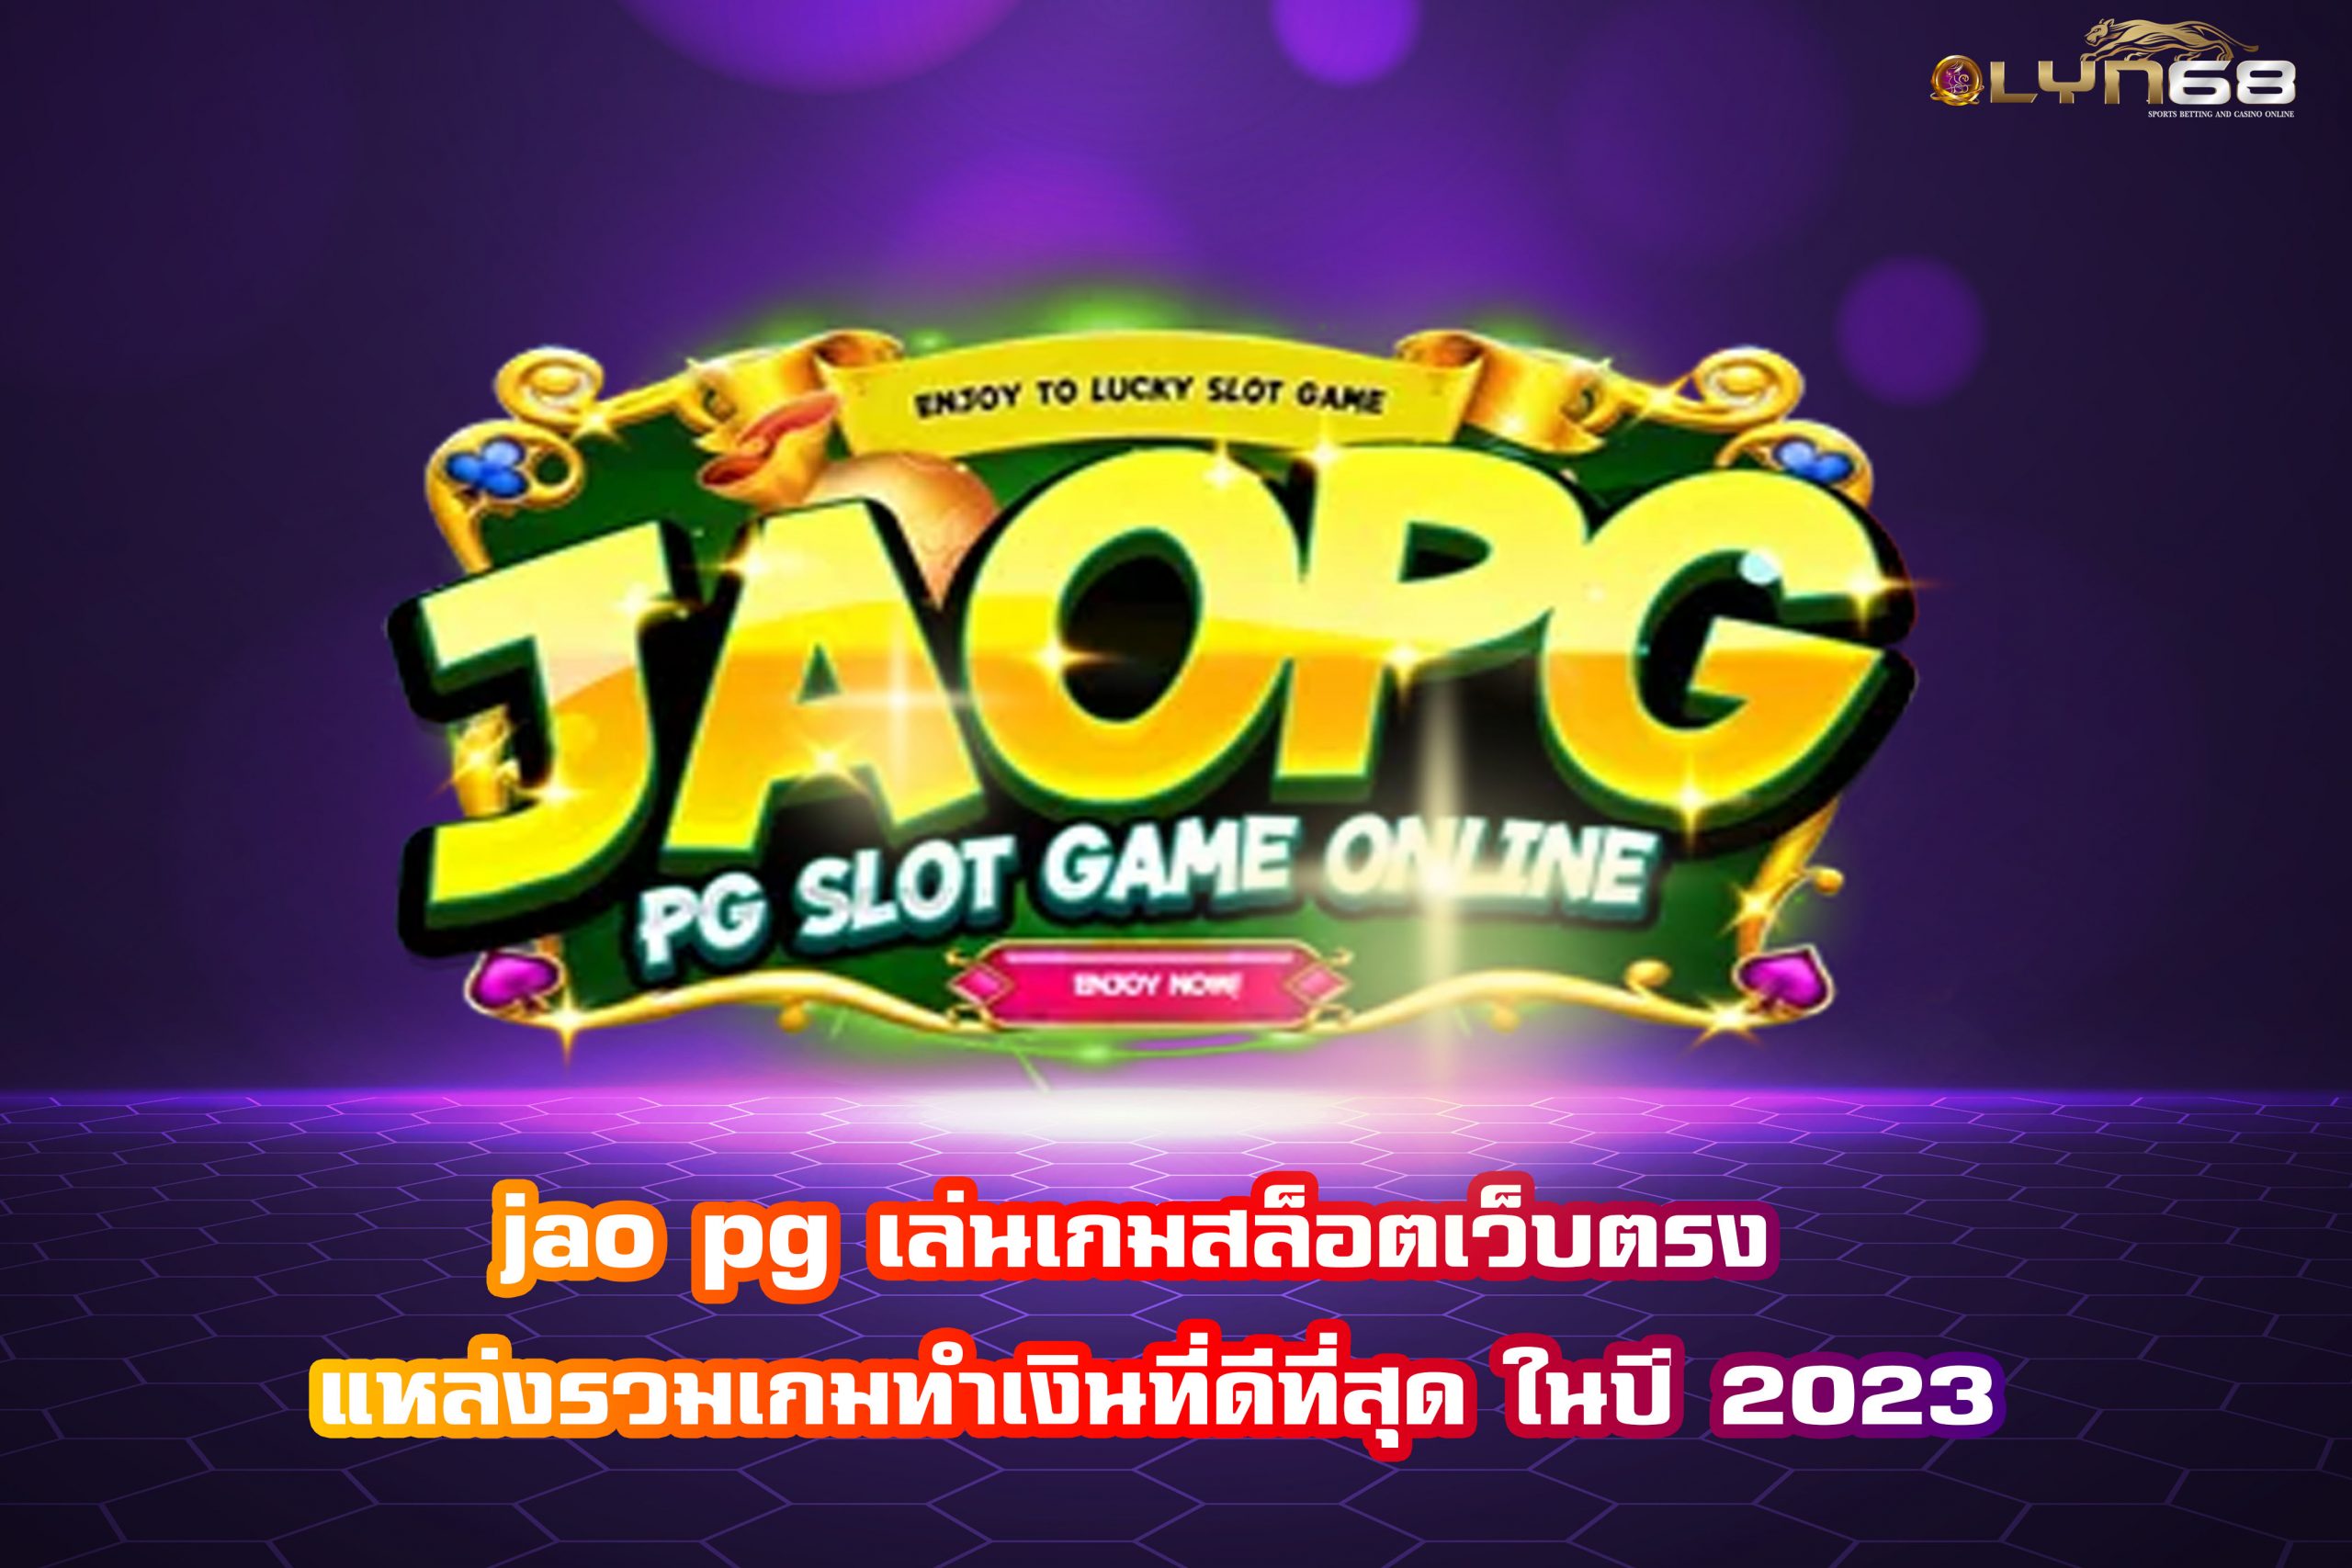 jao pg เล่นเกมสล็อตเว็บตรง แหล่งรวมเกมทำเงินที่ดีที่สุด ในปี 2023